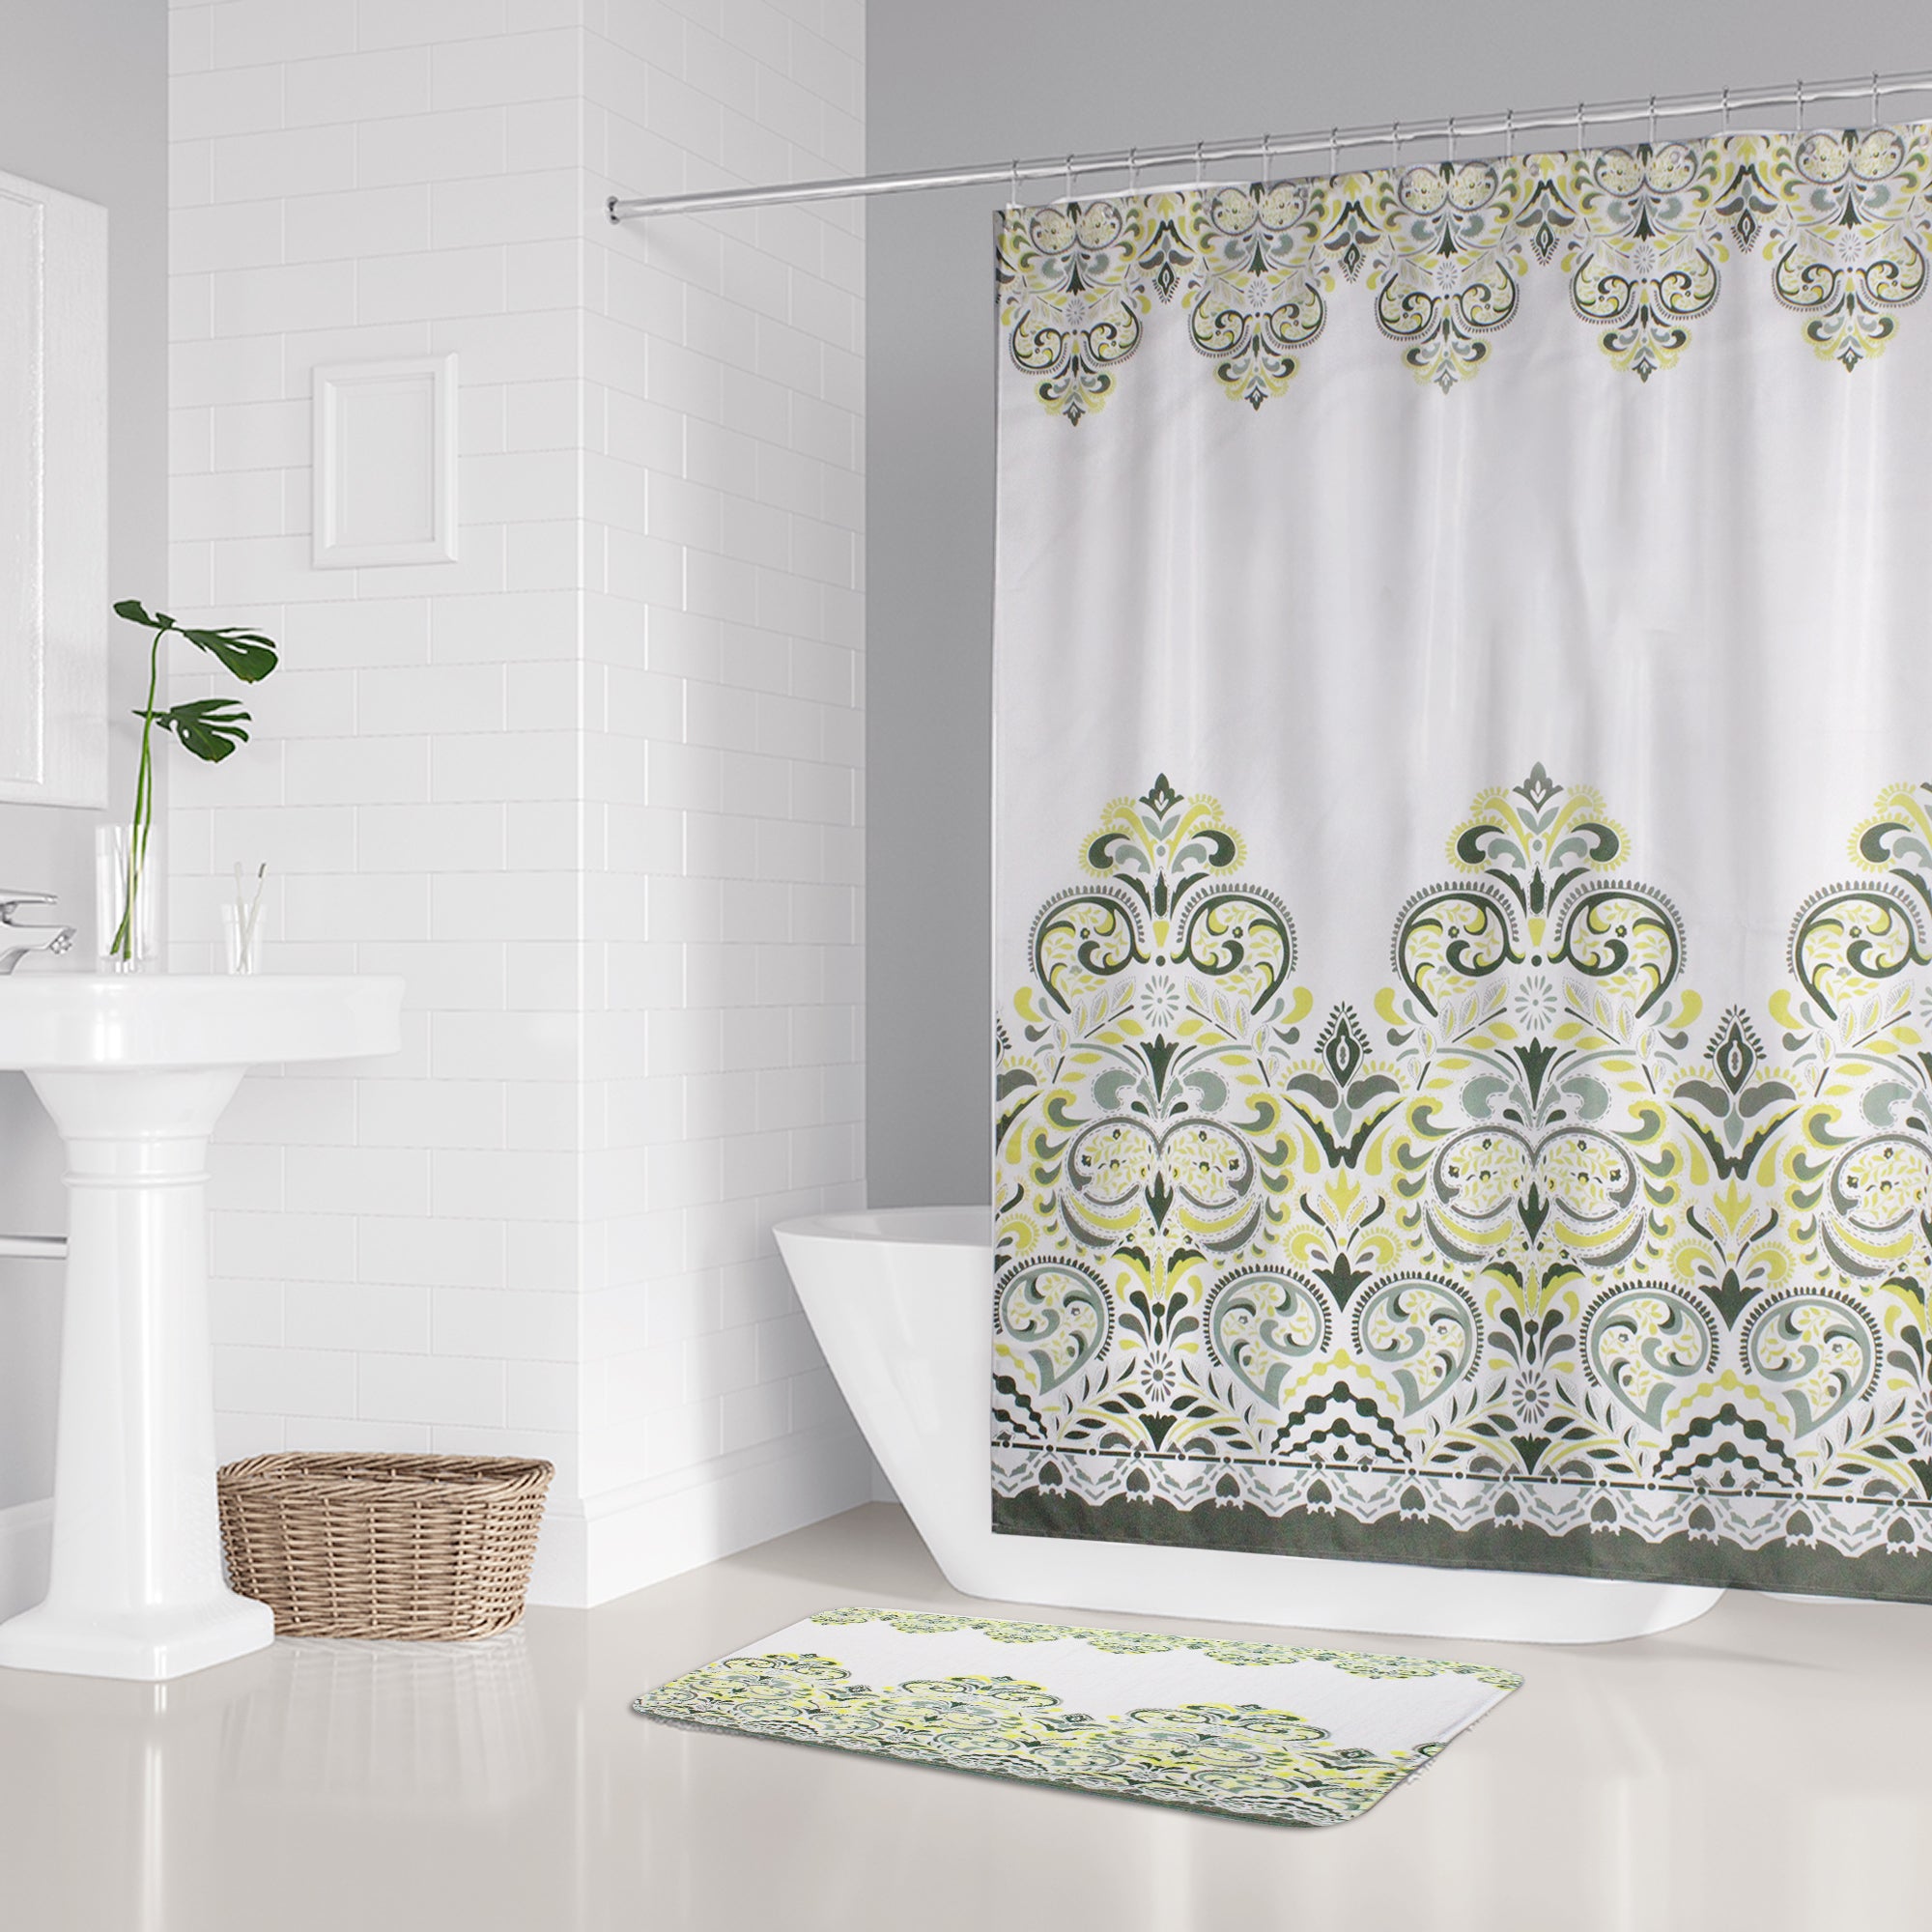 LMA 180cm Pattern Fabric Shower Curtain & 3 Piece Toilet Cover & Mat Set